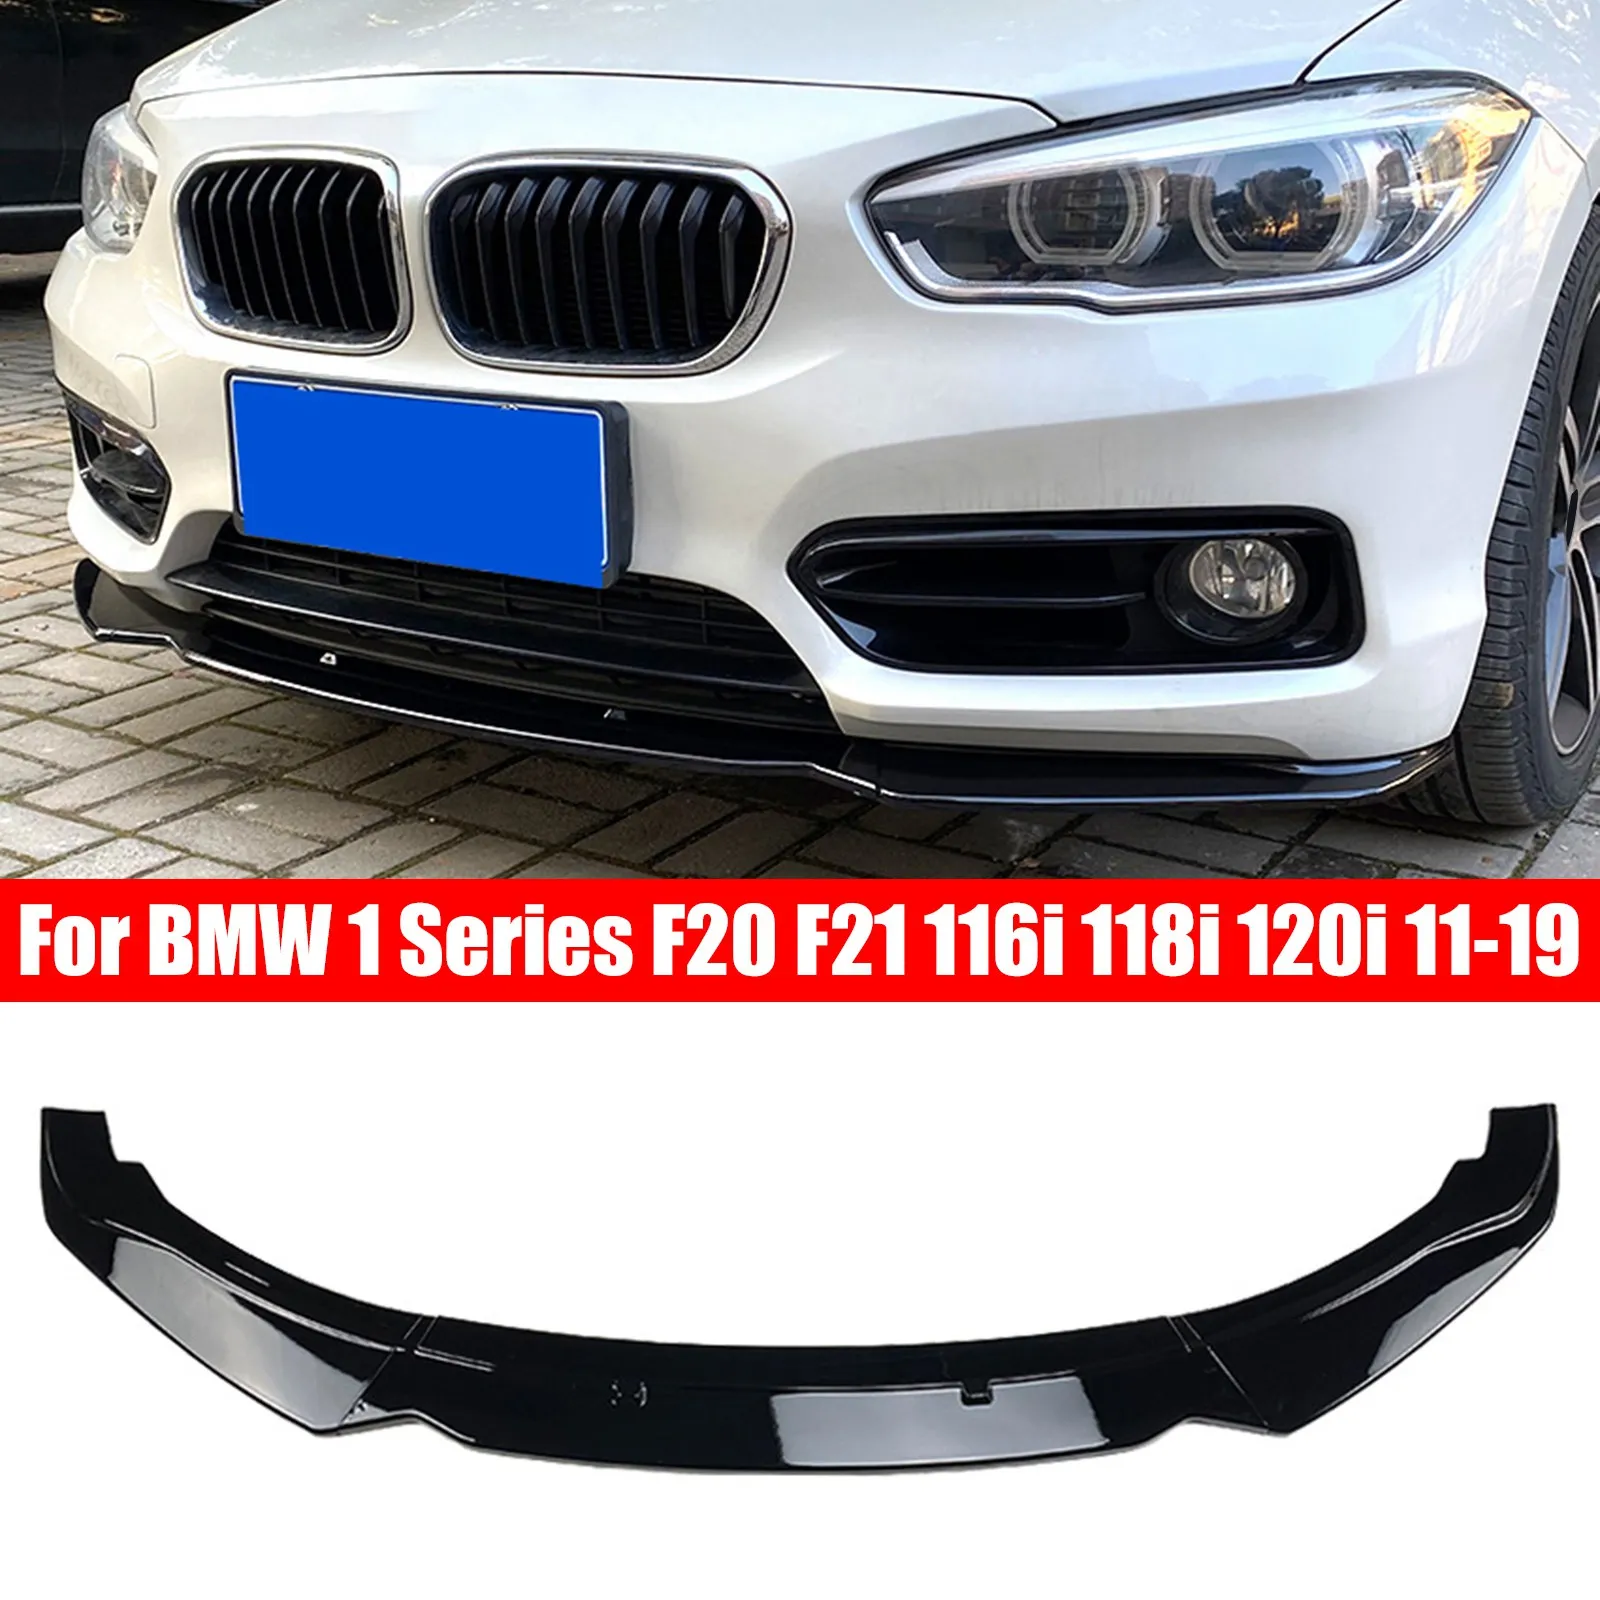 

Car Front Lower Bumper Lip Spoiler Splitter Diffuser Cover Guard Protector Kit For BMW 1 Series F20 F21 116i 118i 120i 2015-2019